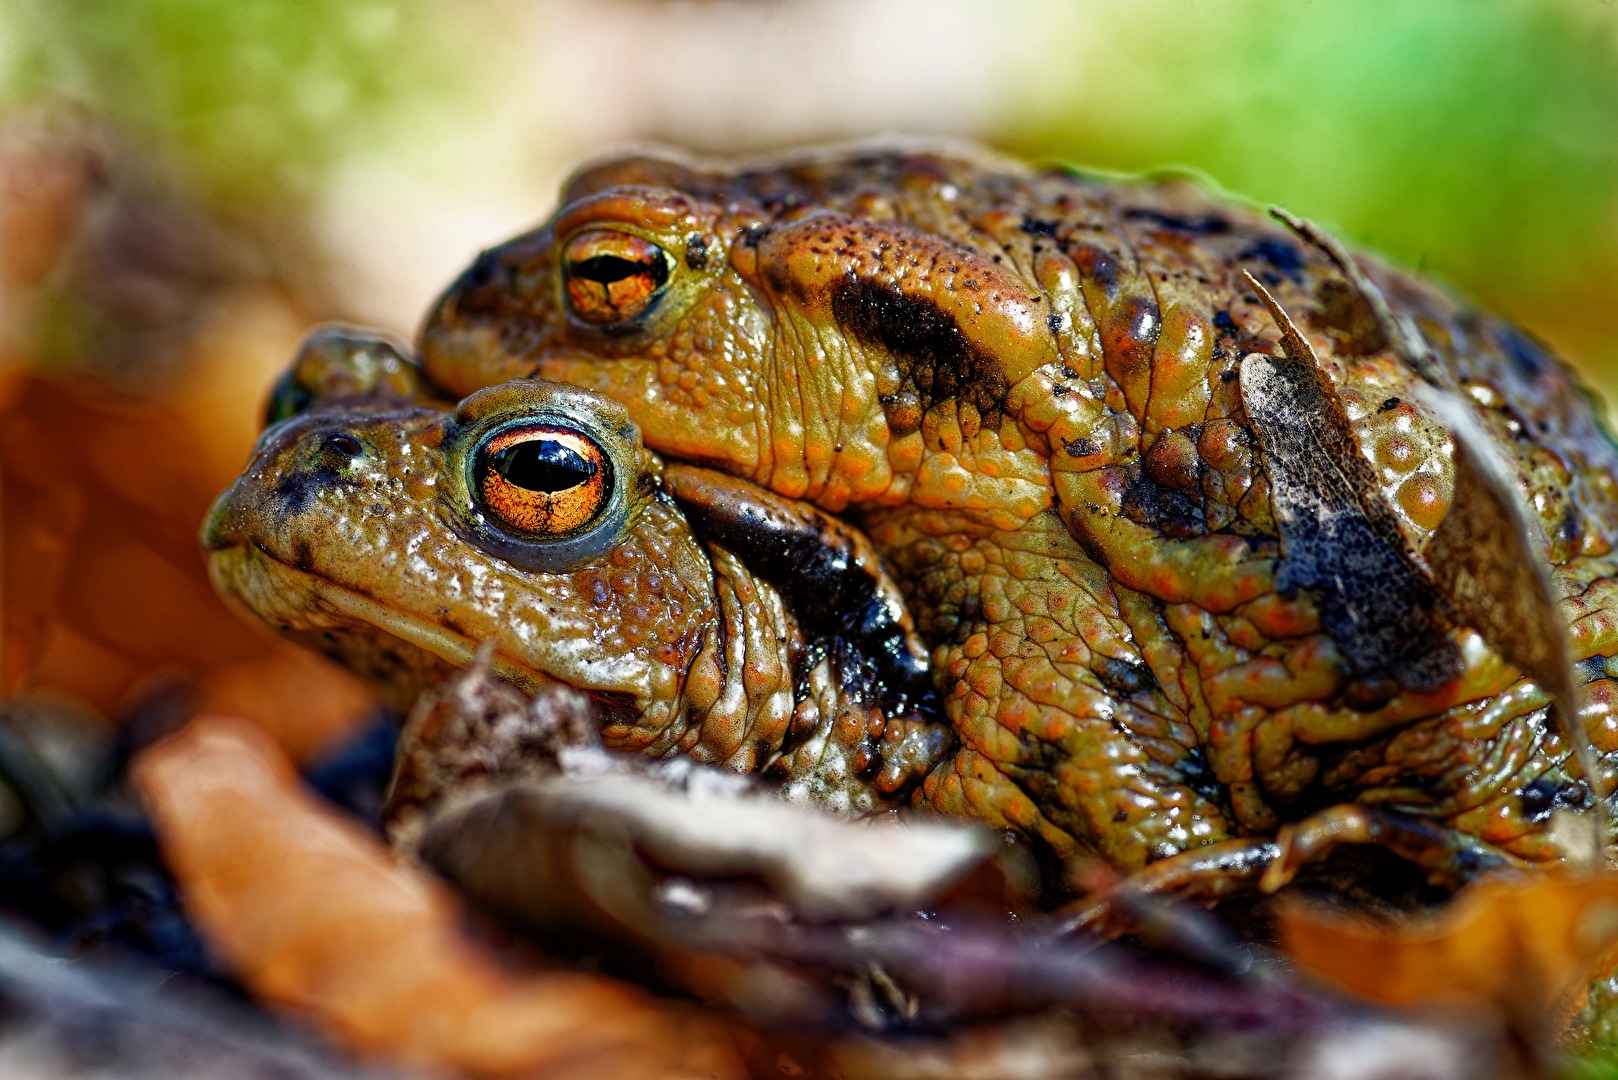 Golden eyes - Erdkröten bei der Paarung